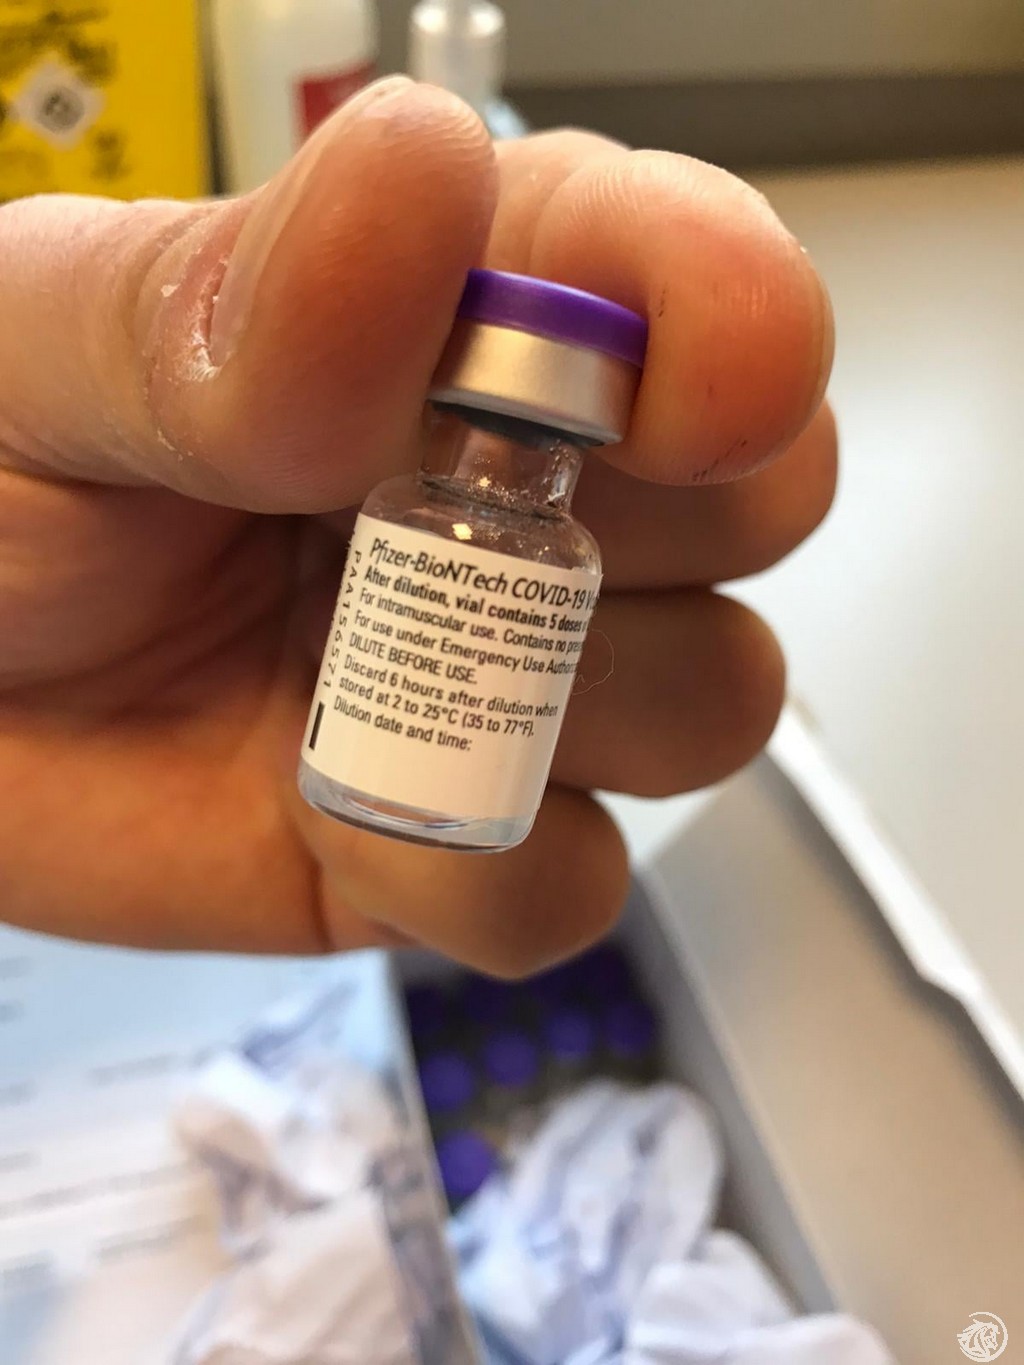 vaccino Covid Pfizer Biontech